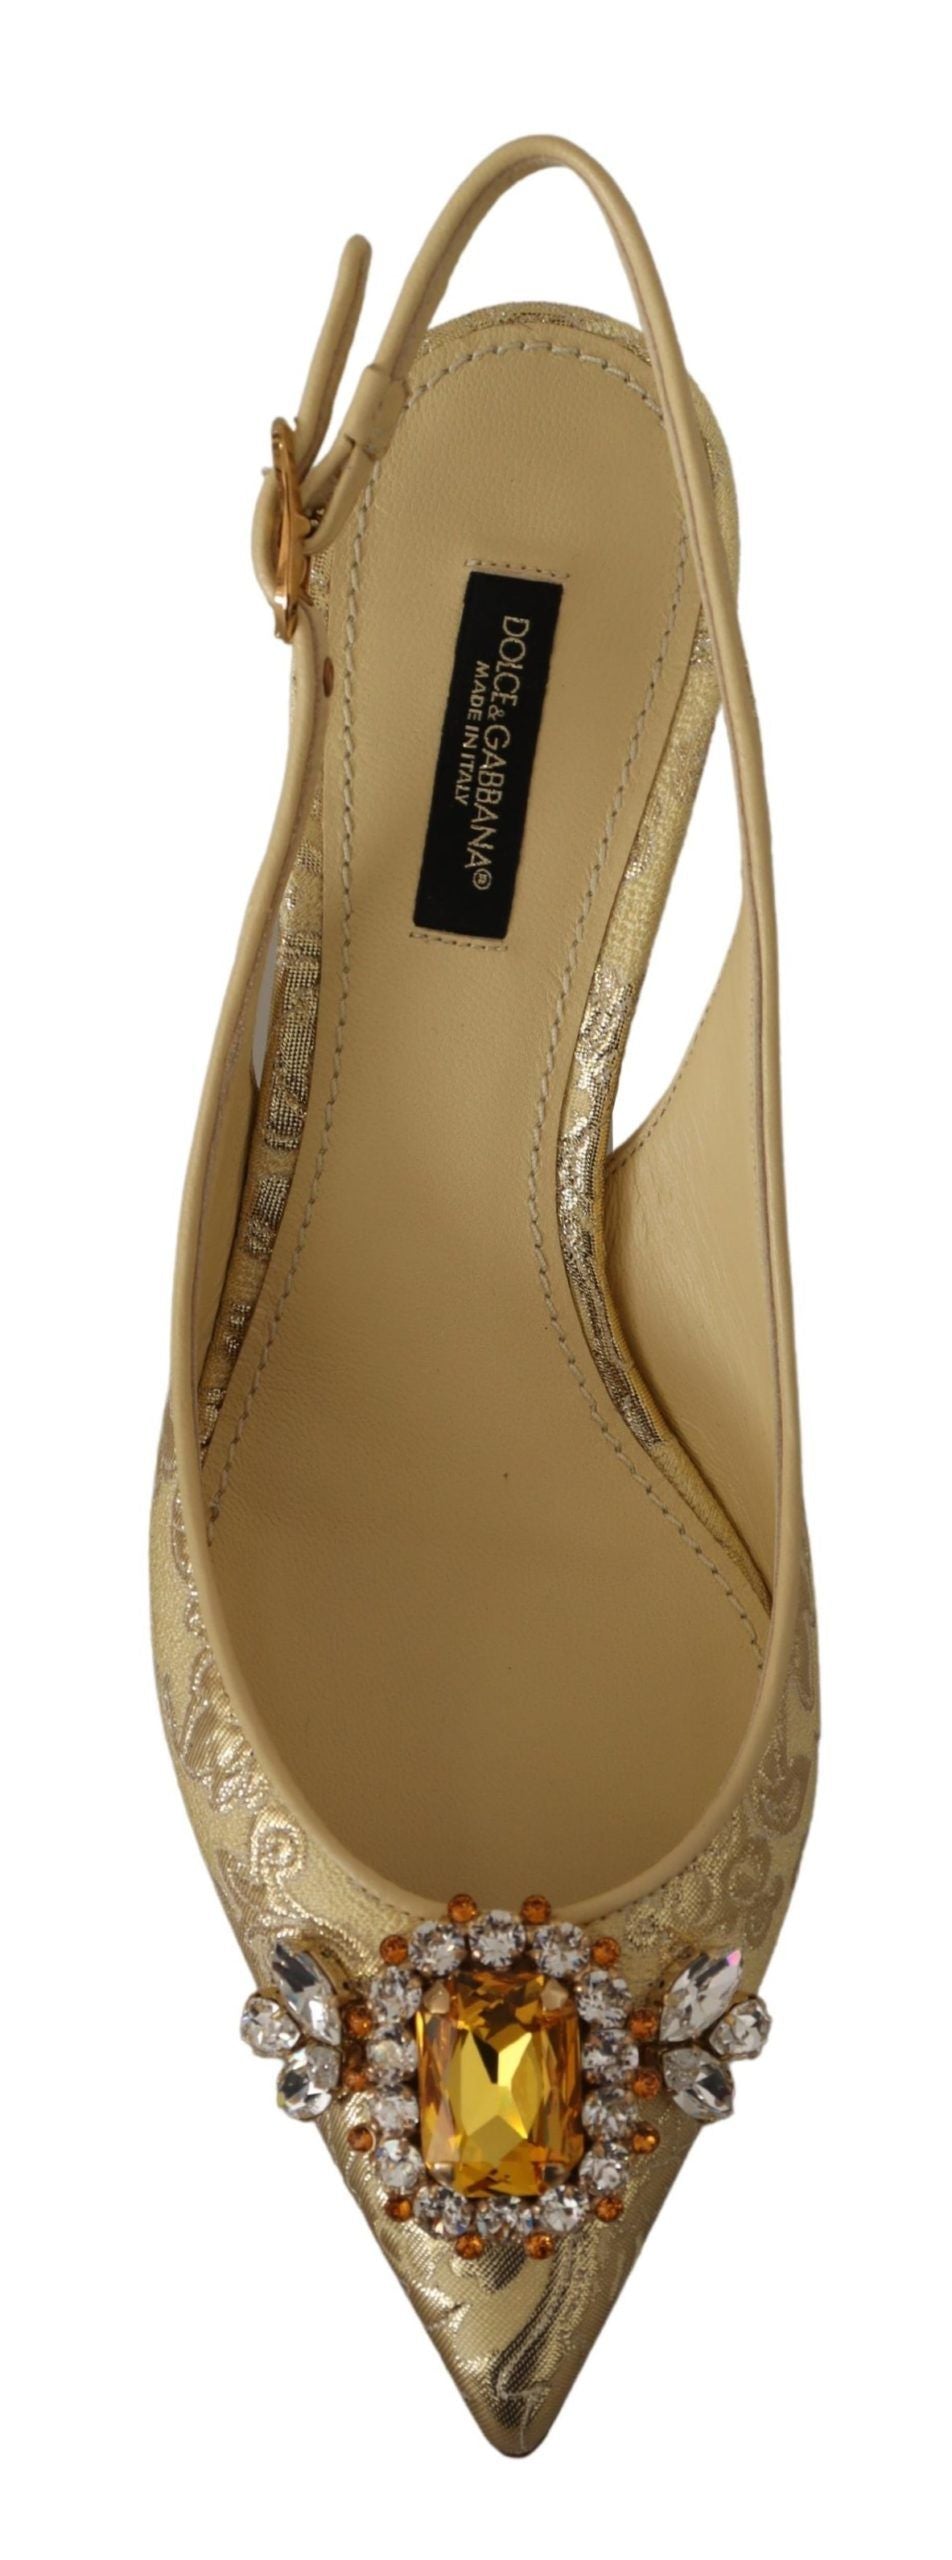 Dolce & Gabbana Gleaming Gold Crystal Slingback Heels